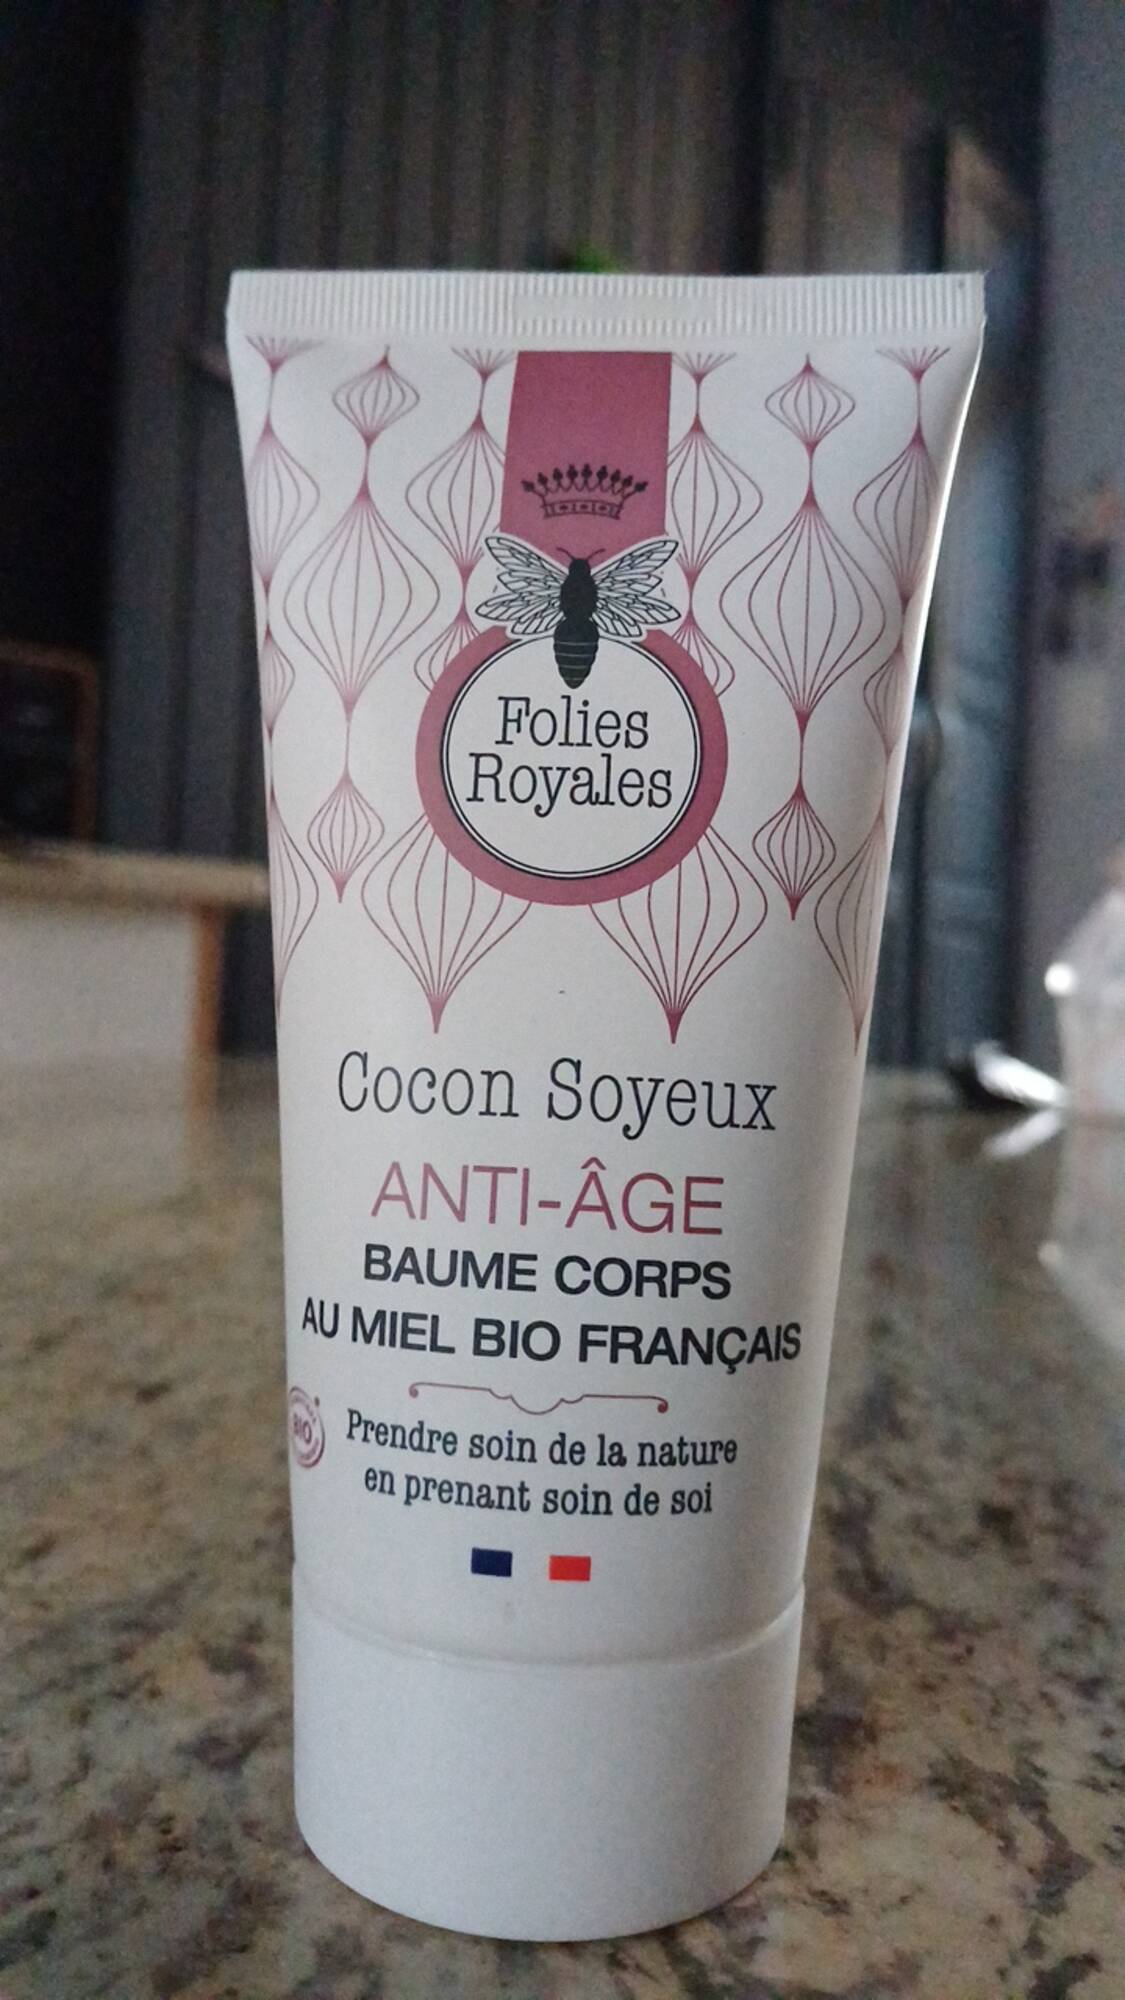 FOLIES ROYALES - Cocon soyeux - Baume corps anti-âge